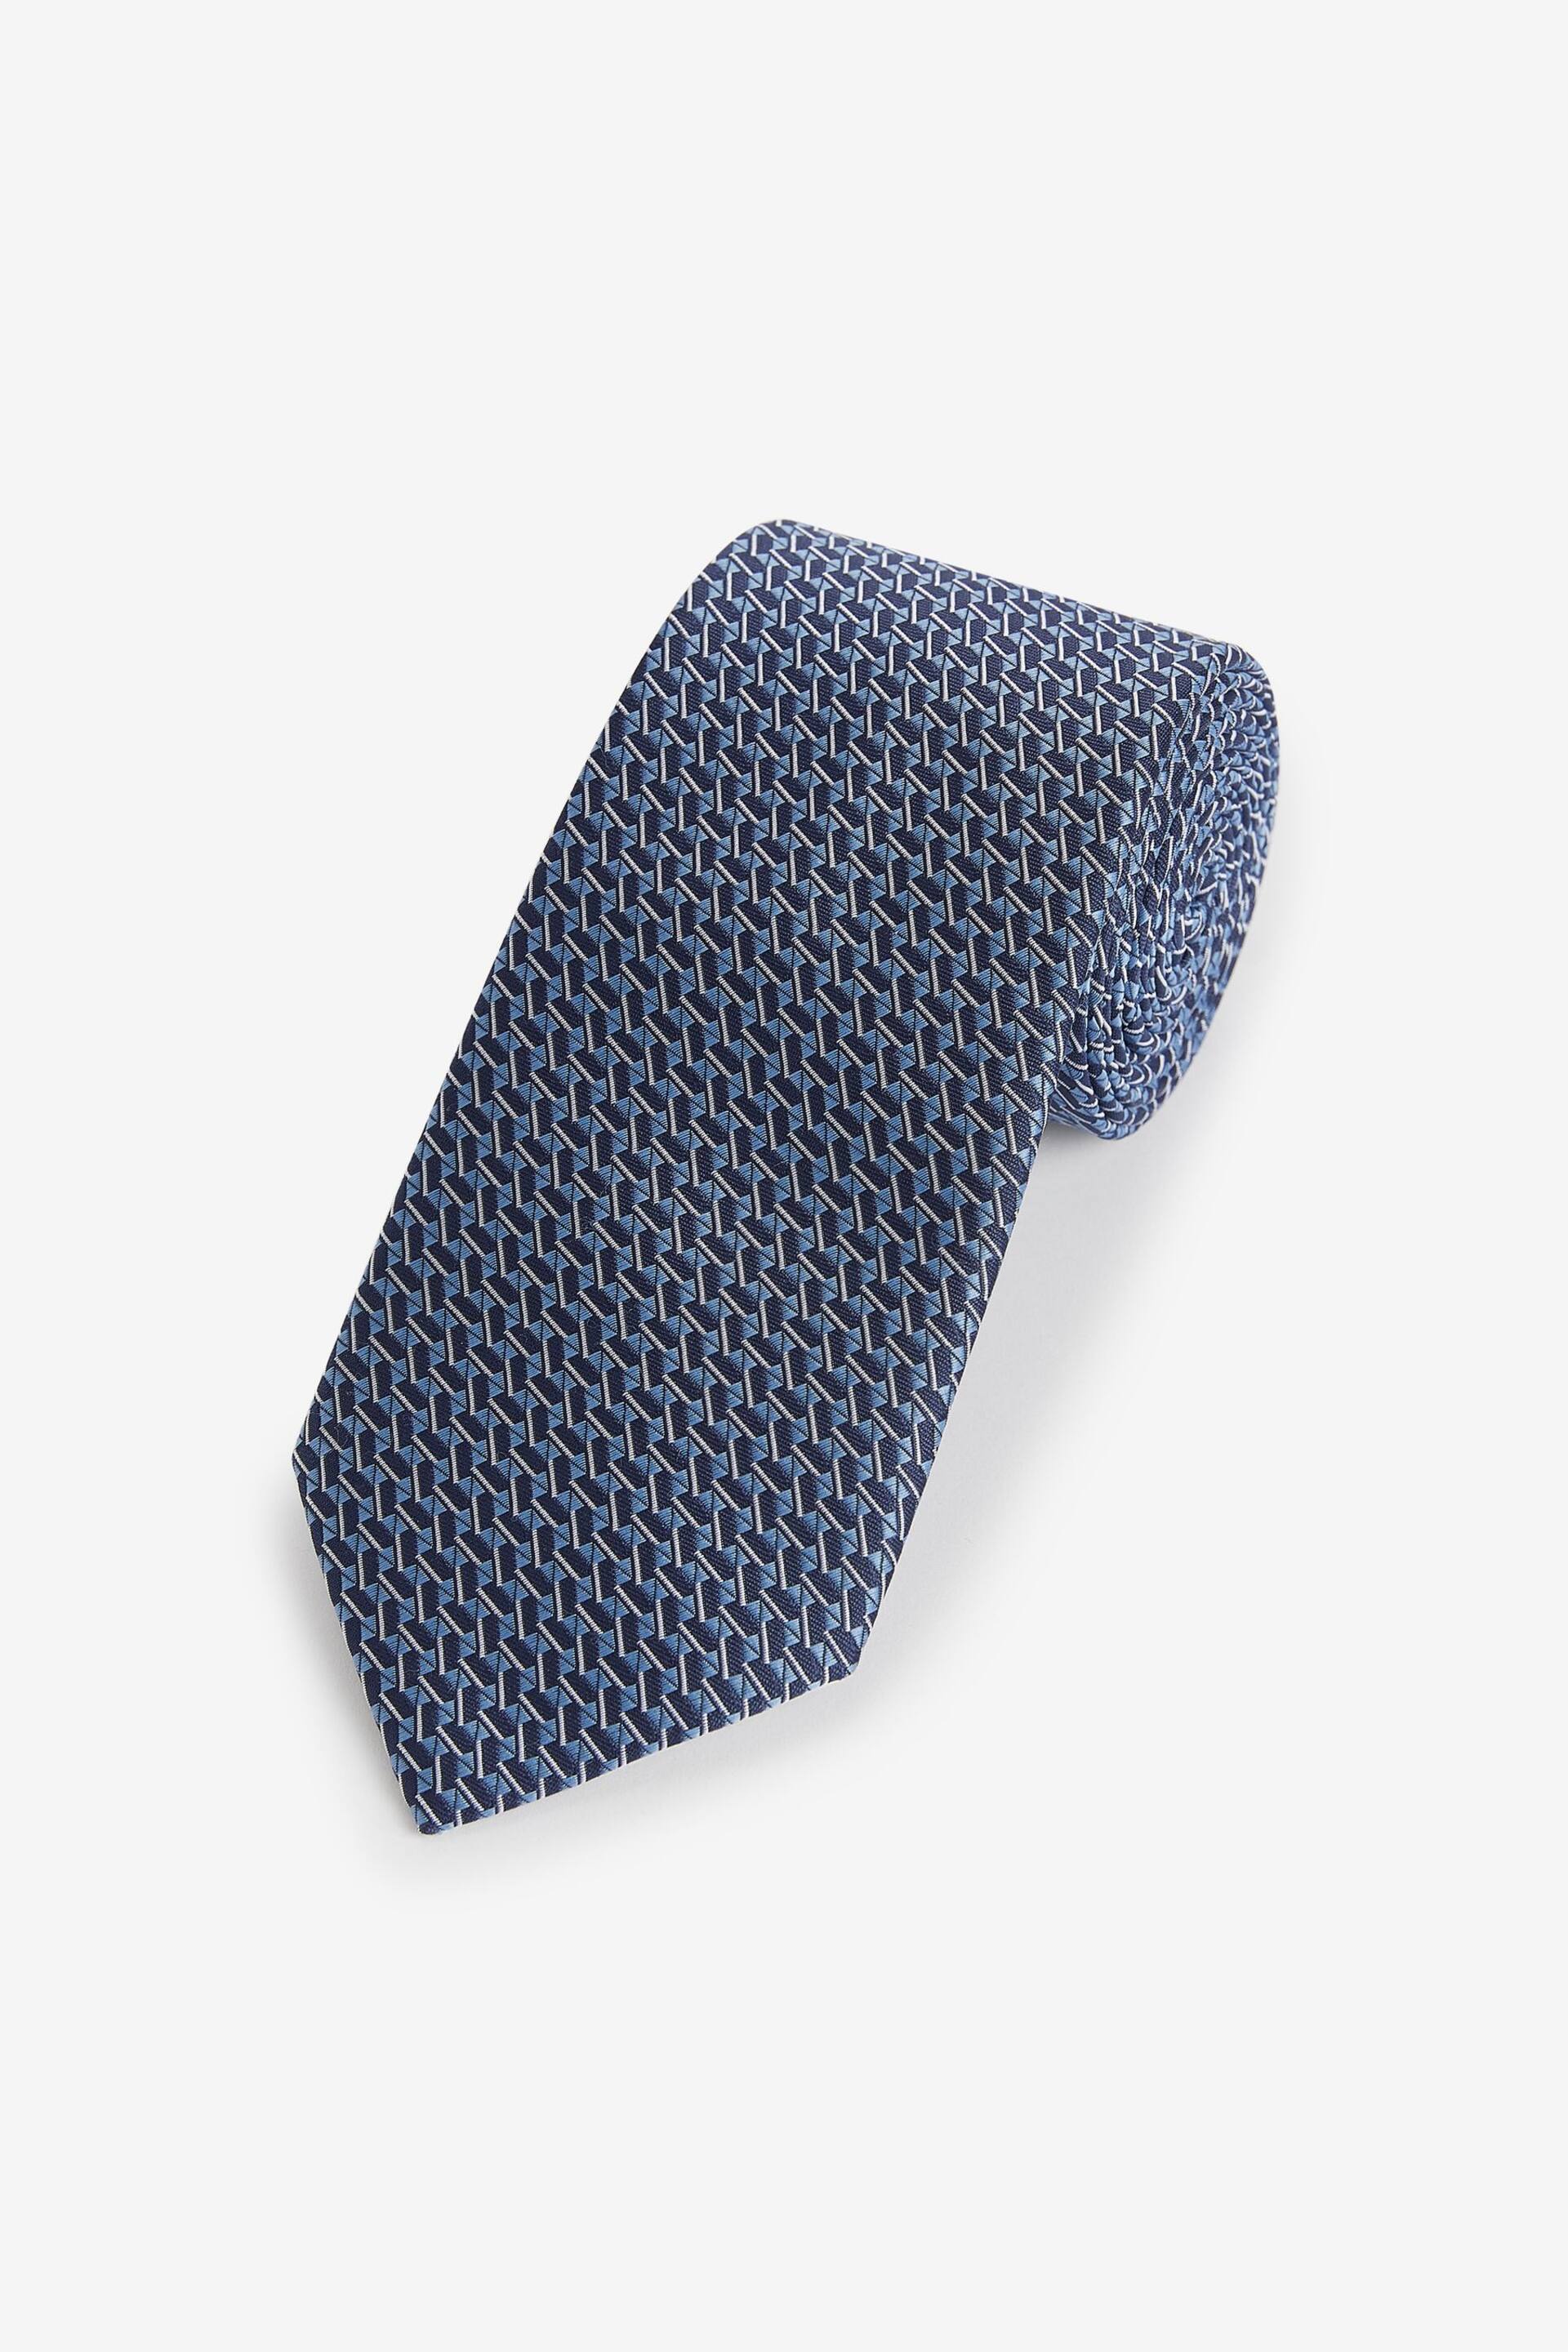 Blue/Navy Pattern Tie - Image 1 of 3